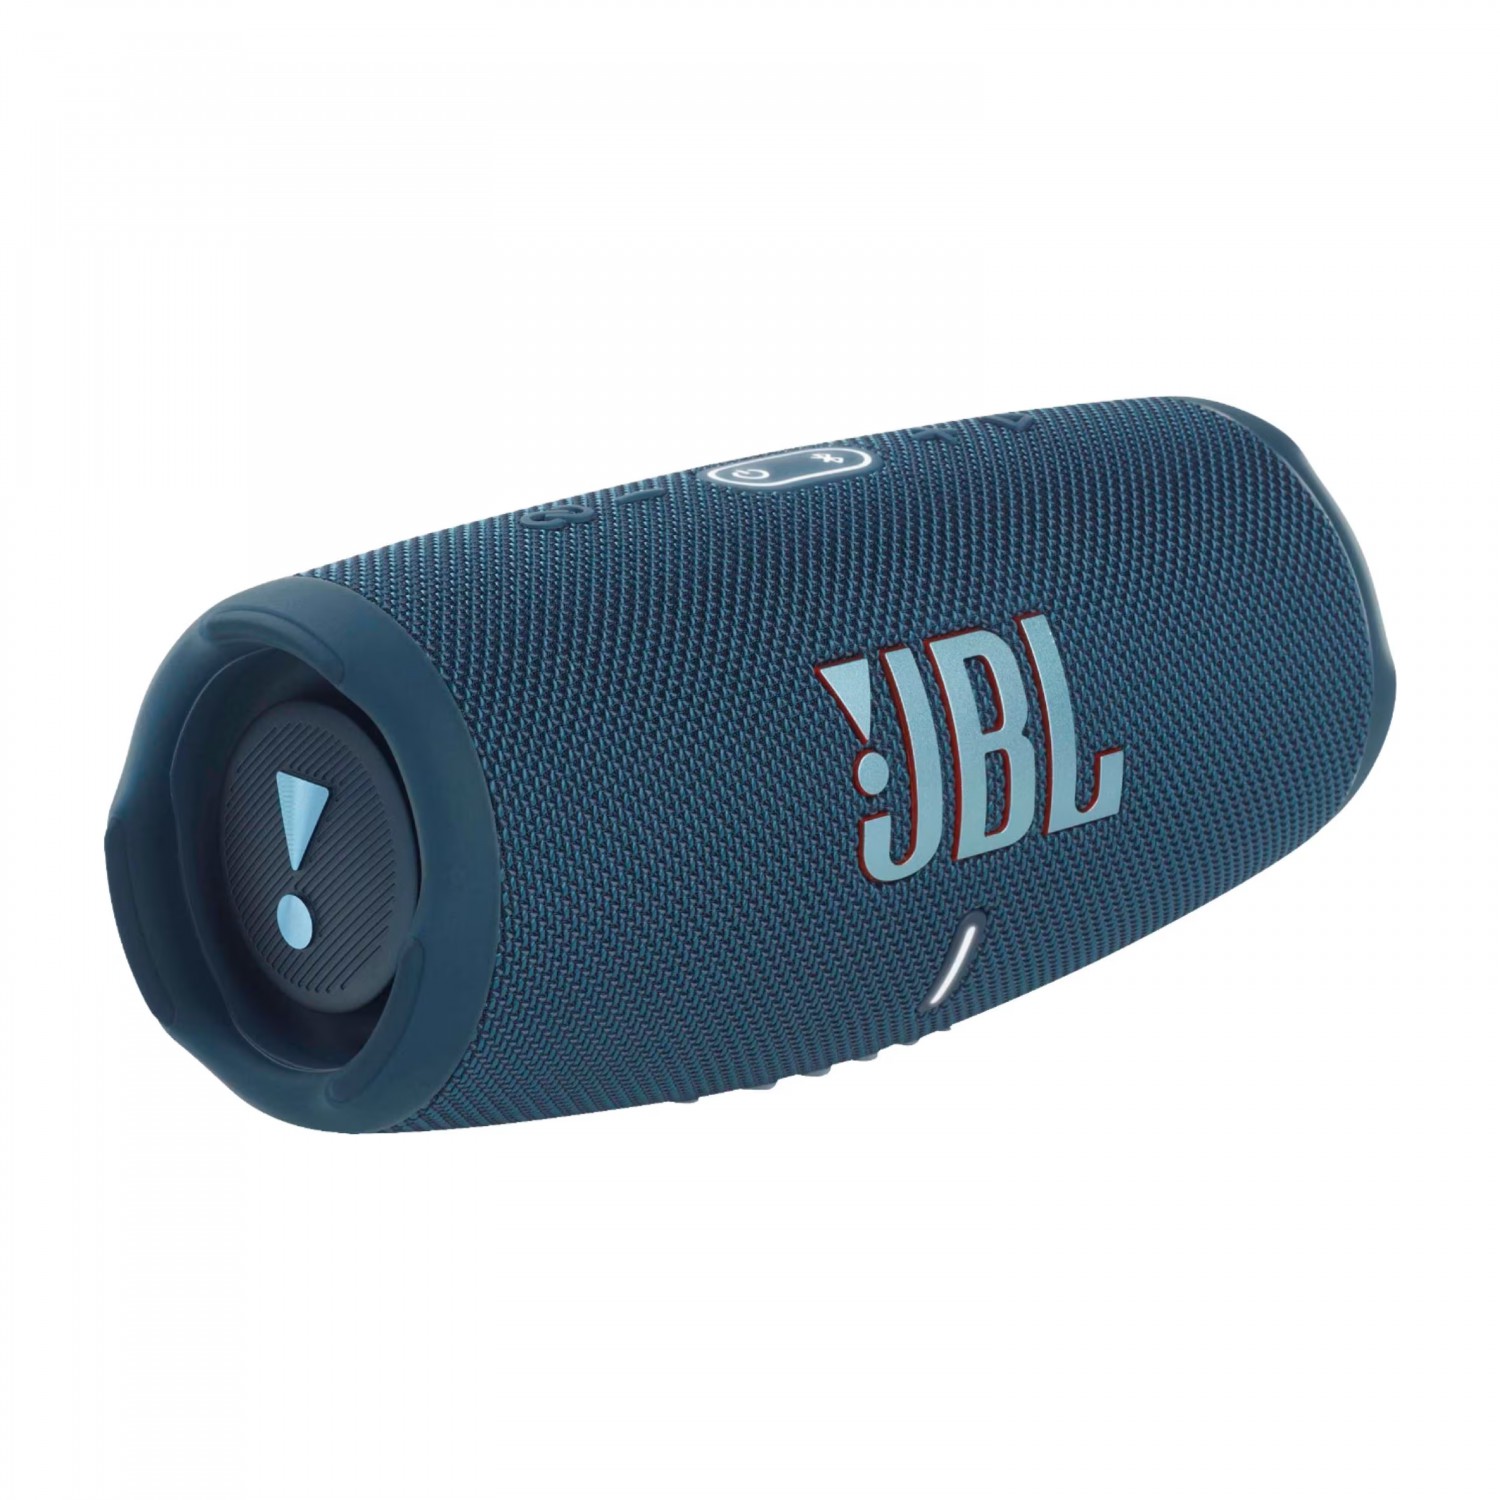 Harman Kardon JBL - Pulse 5 Waterproof Bluetooth Speaker Price and Features